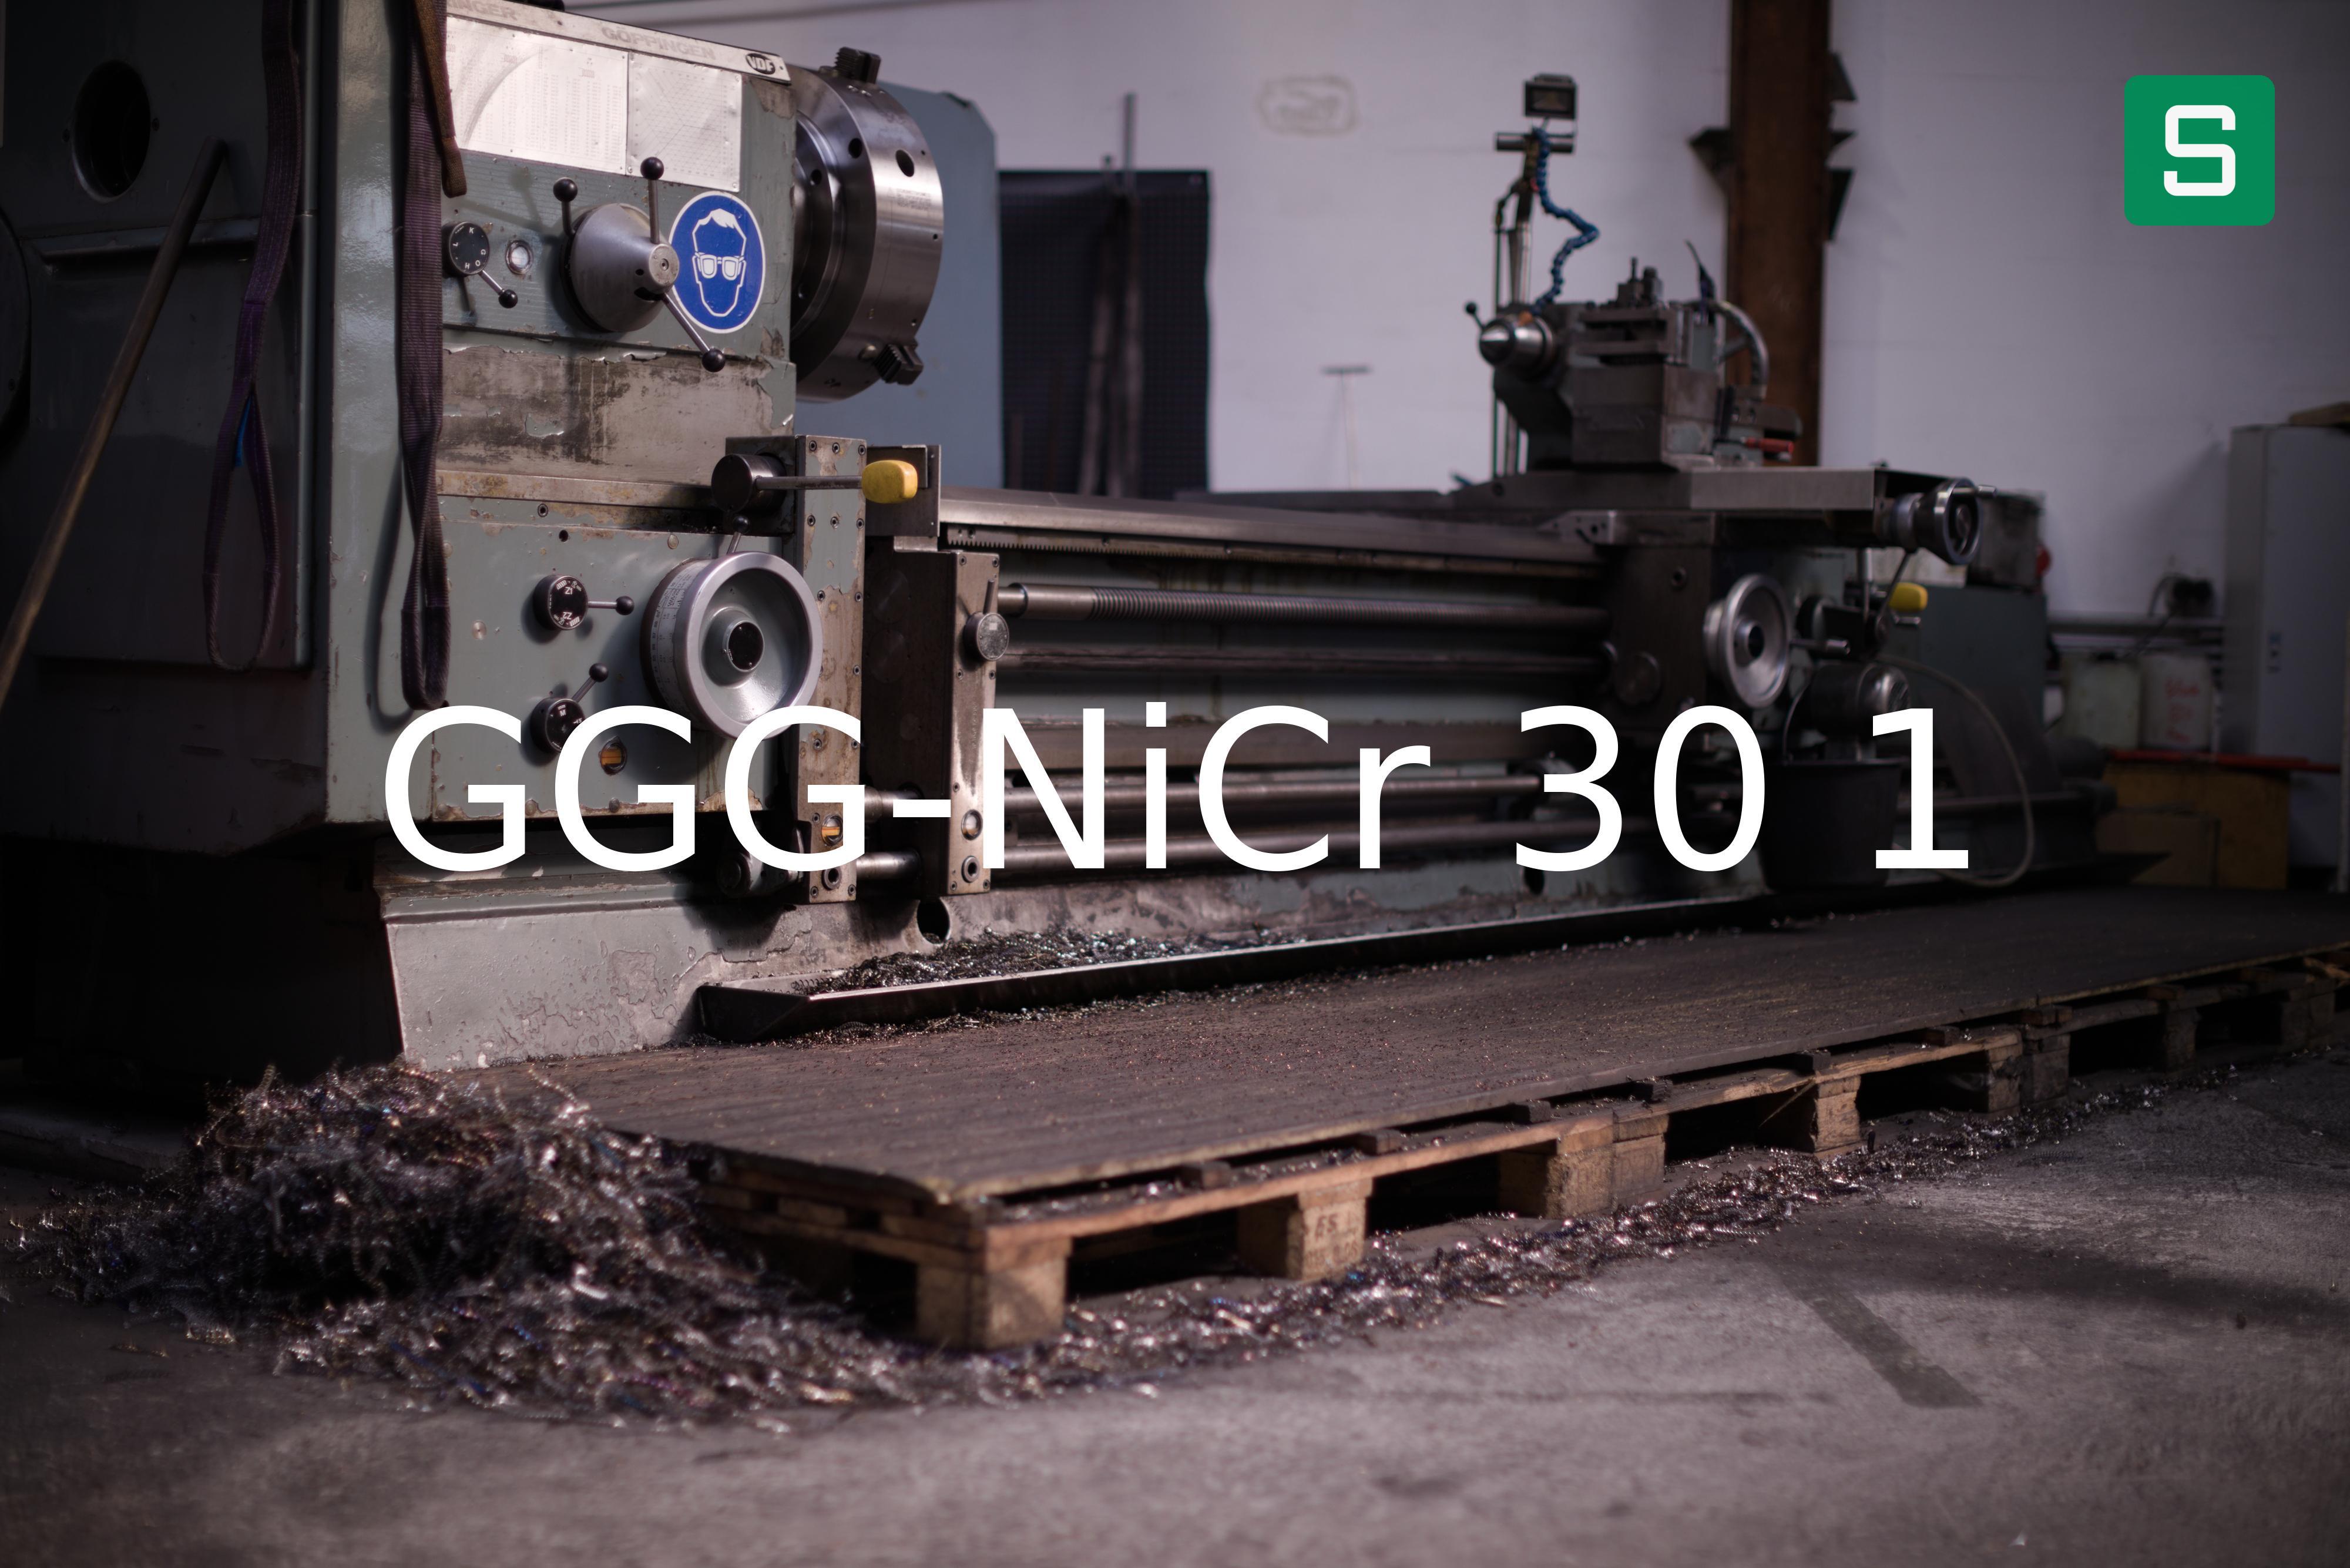 Steel Material: GGG-NiCr 30 1